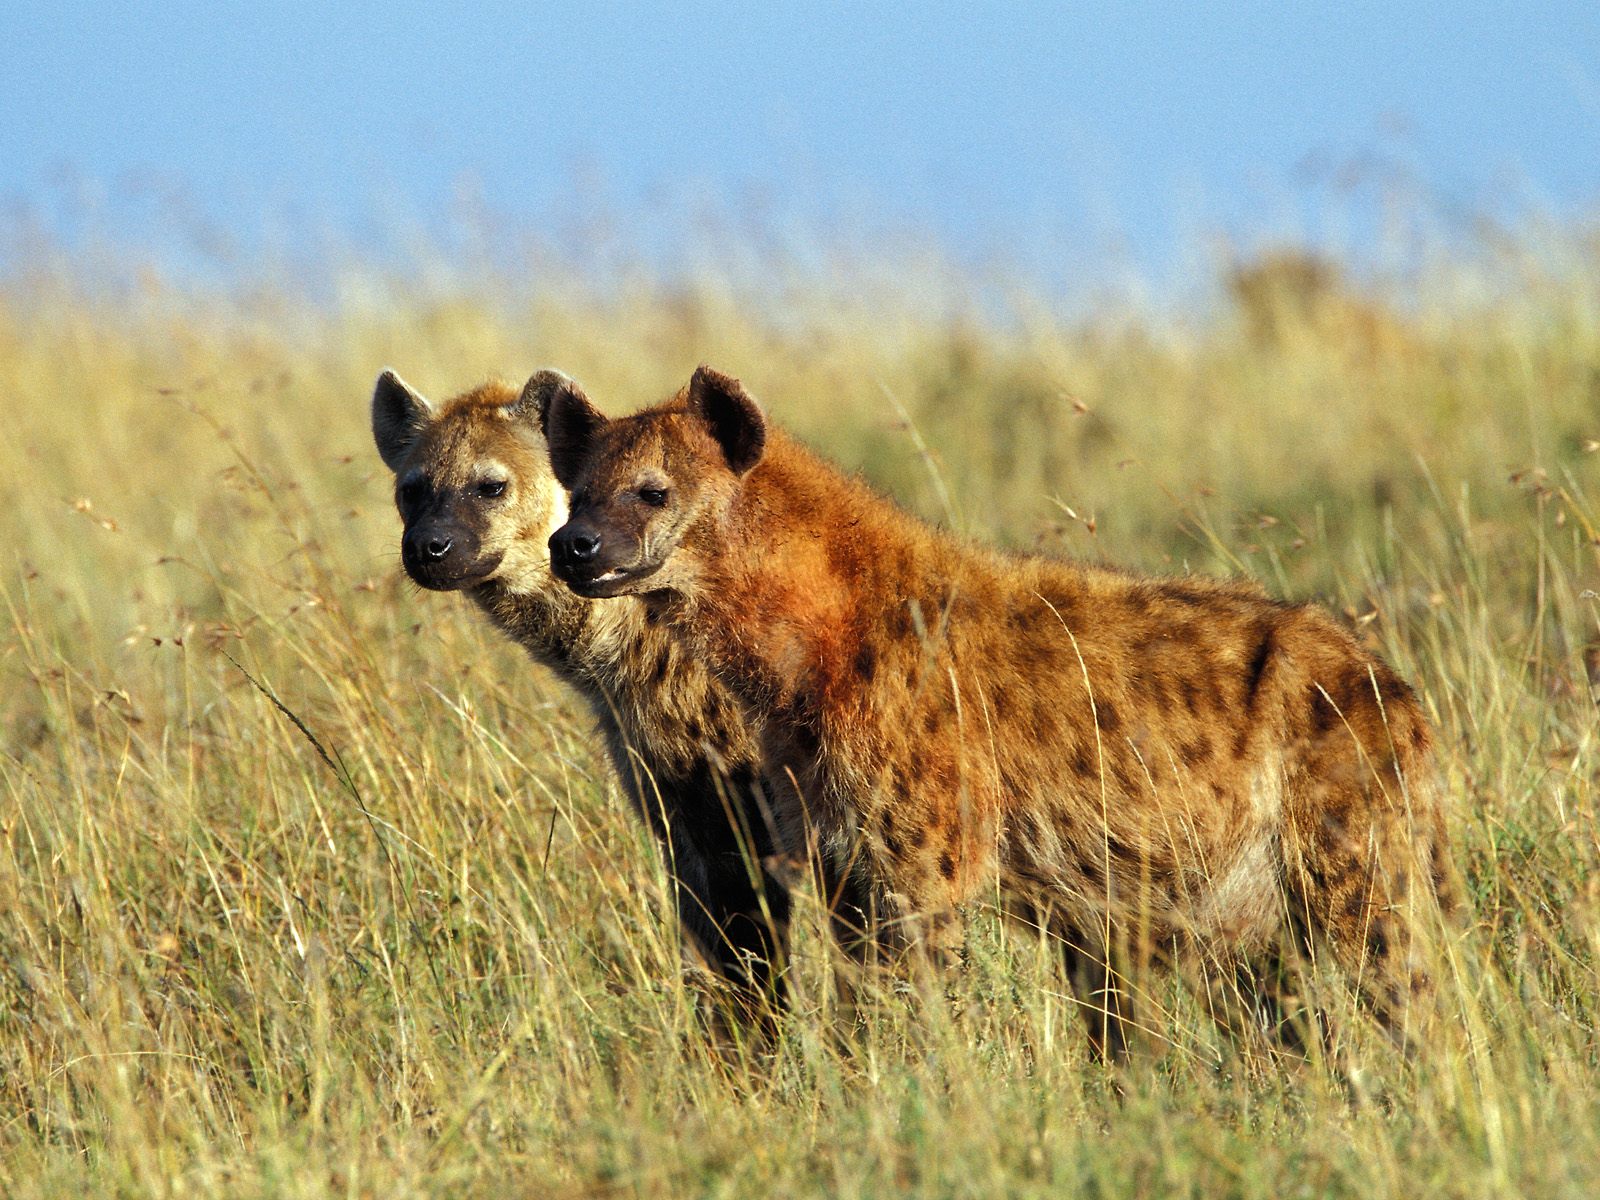 Two hyenas